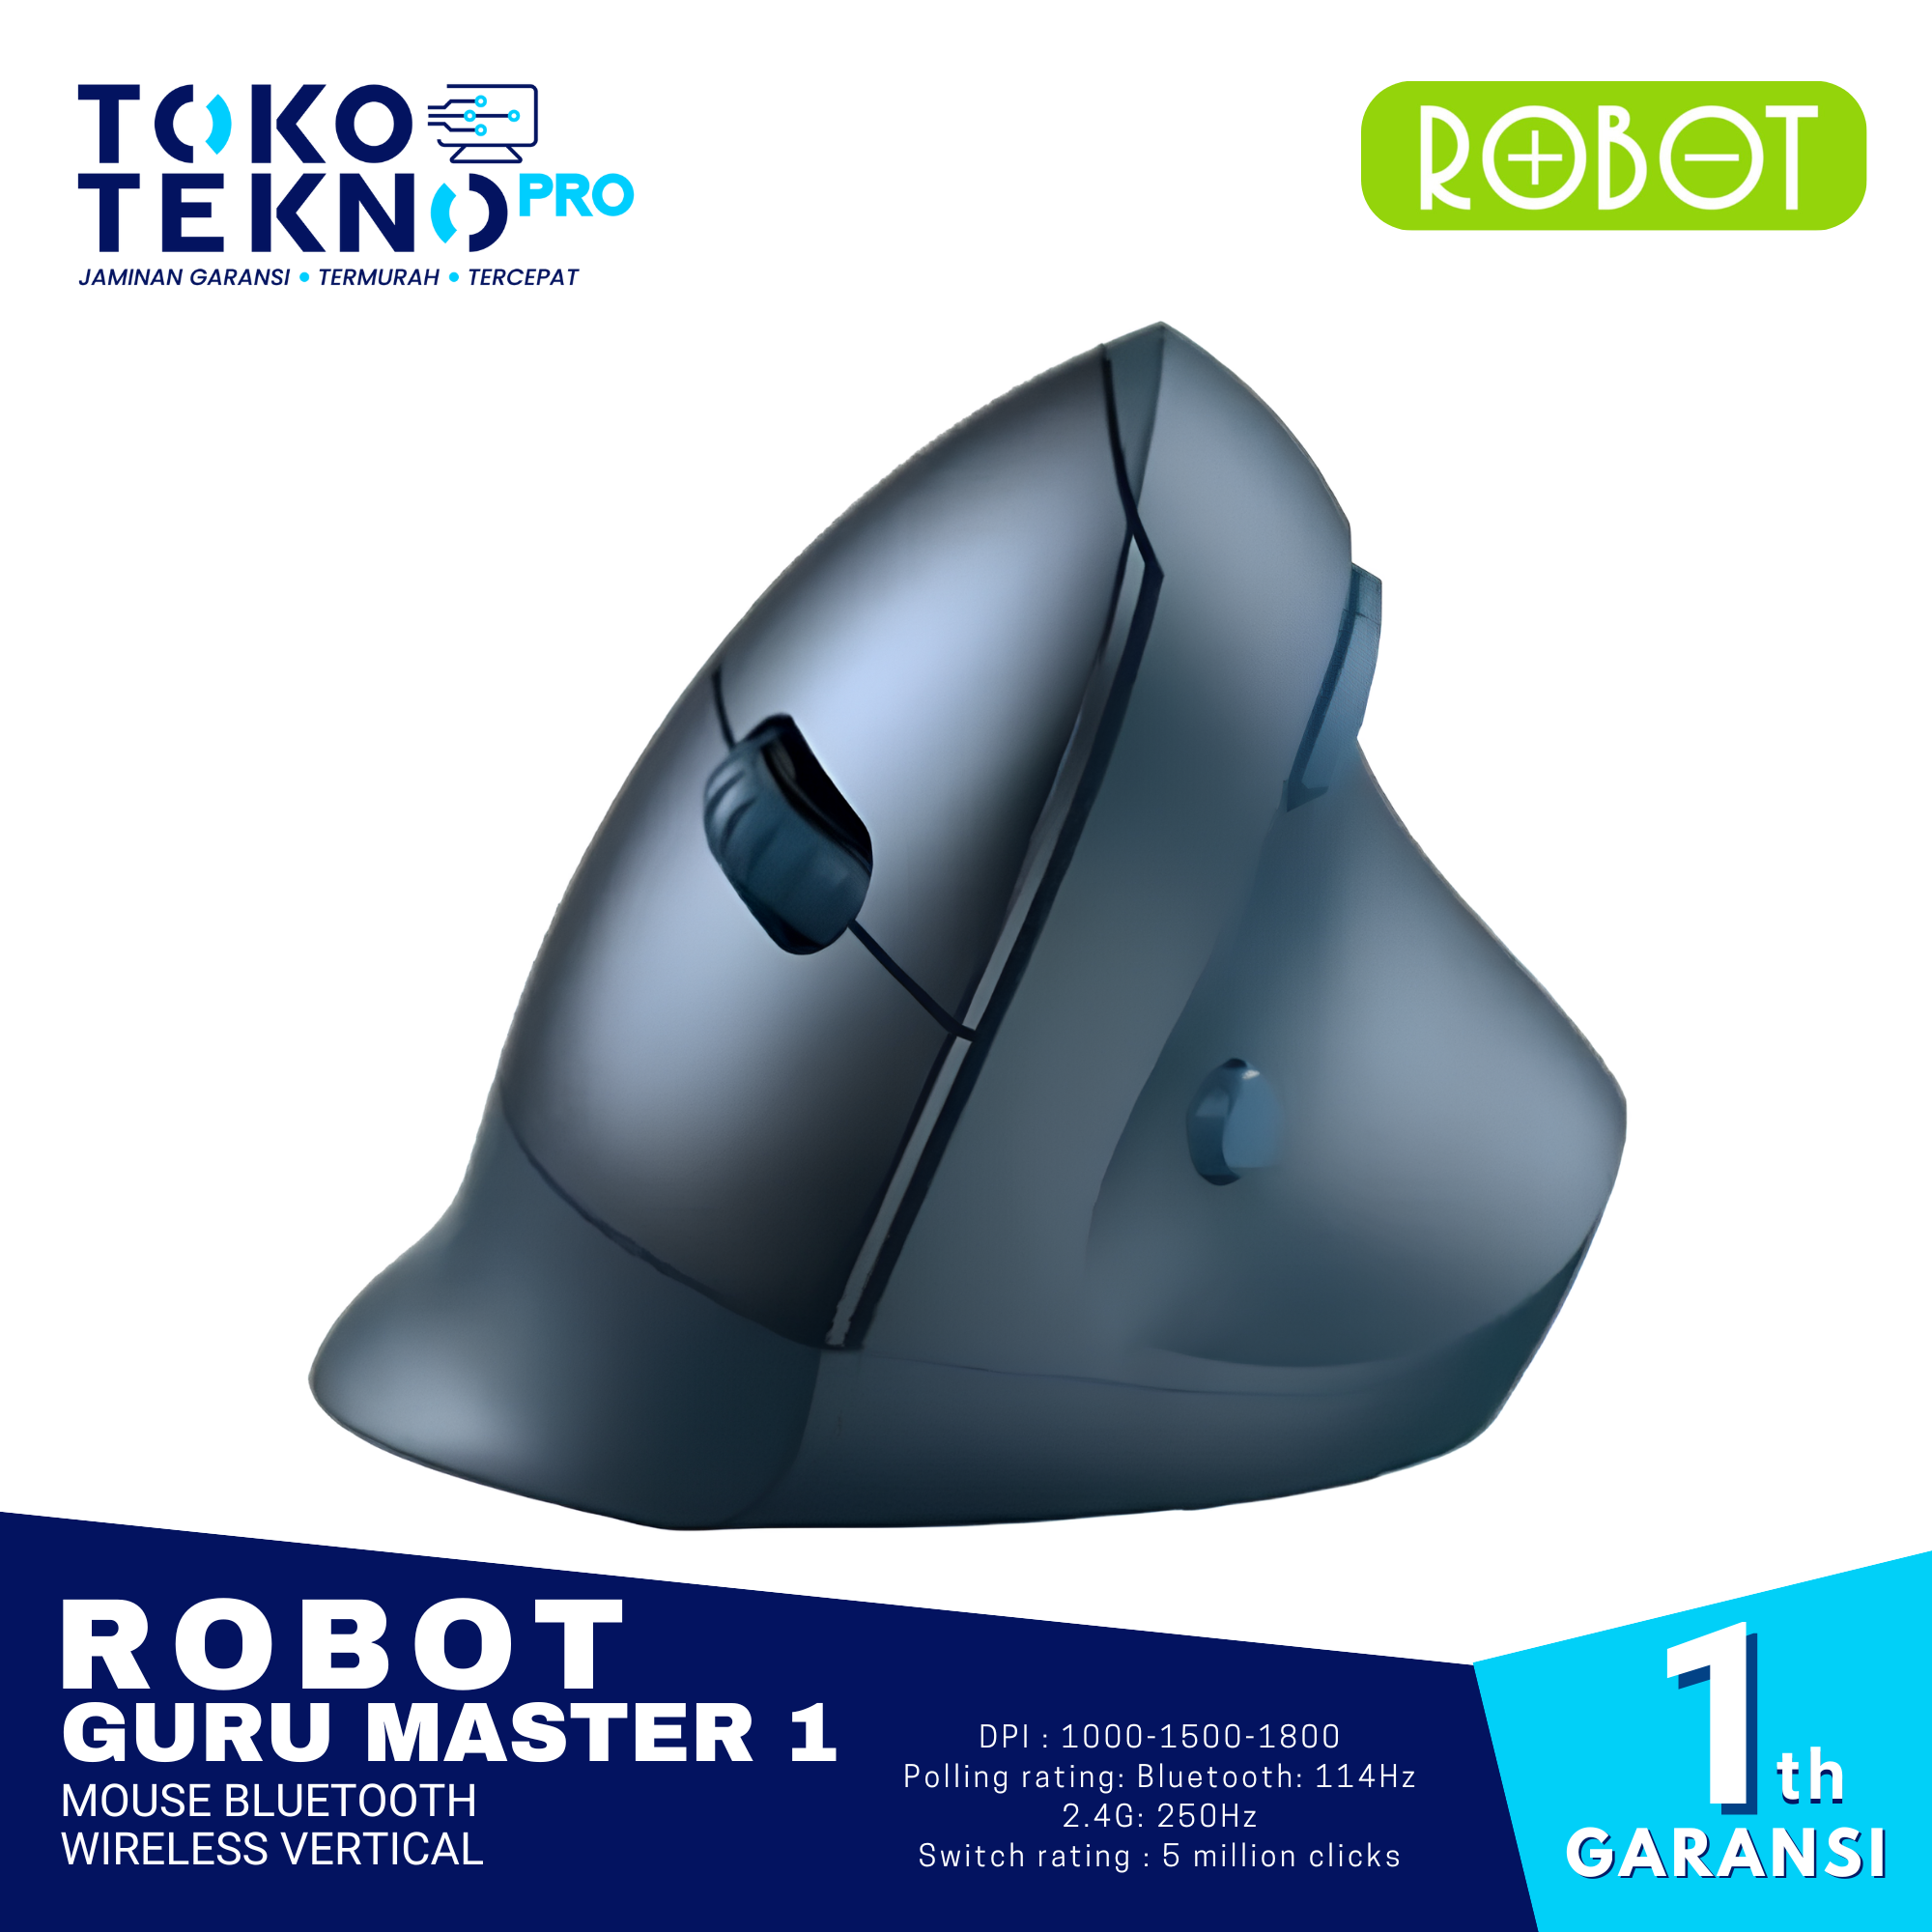 Robot Guru Master 1